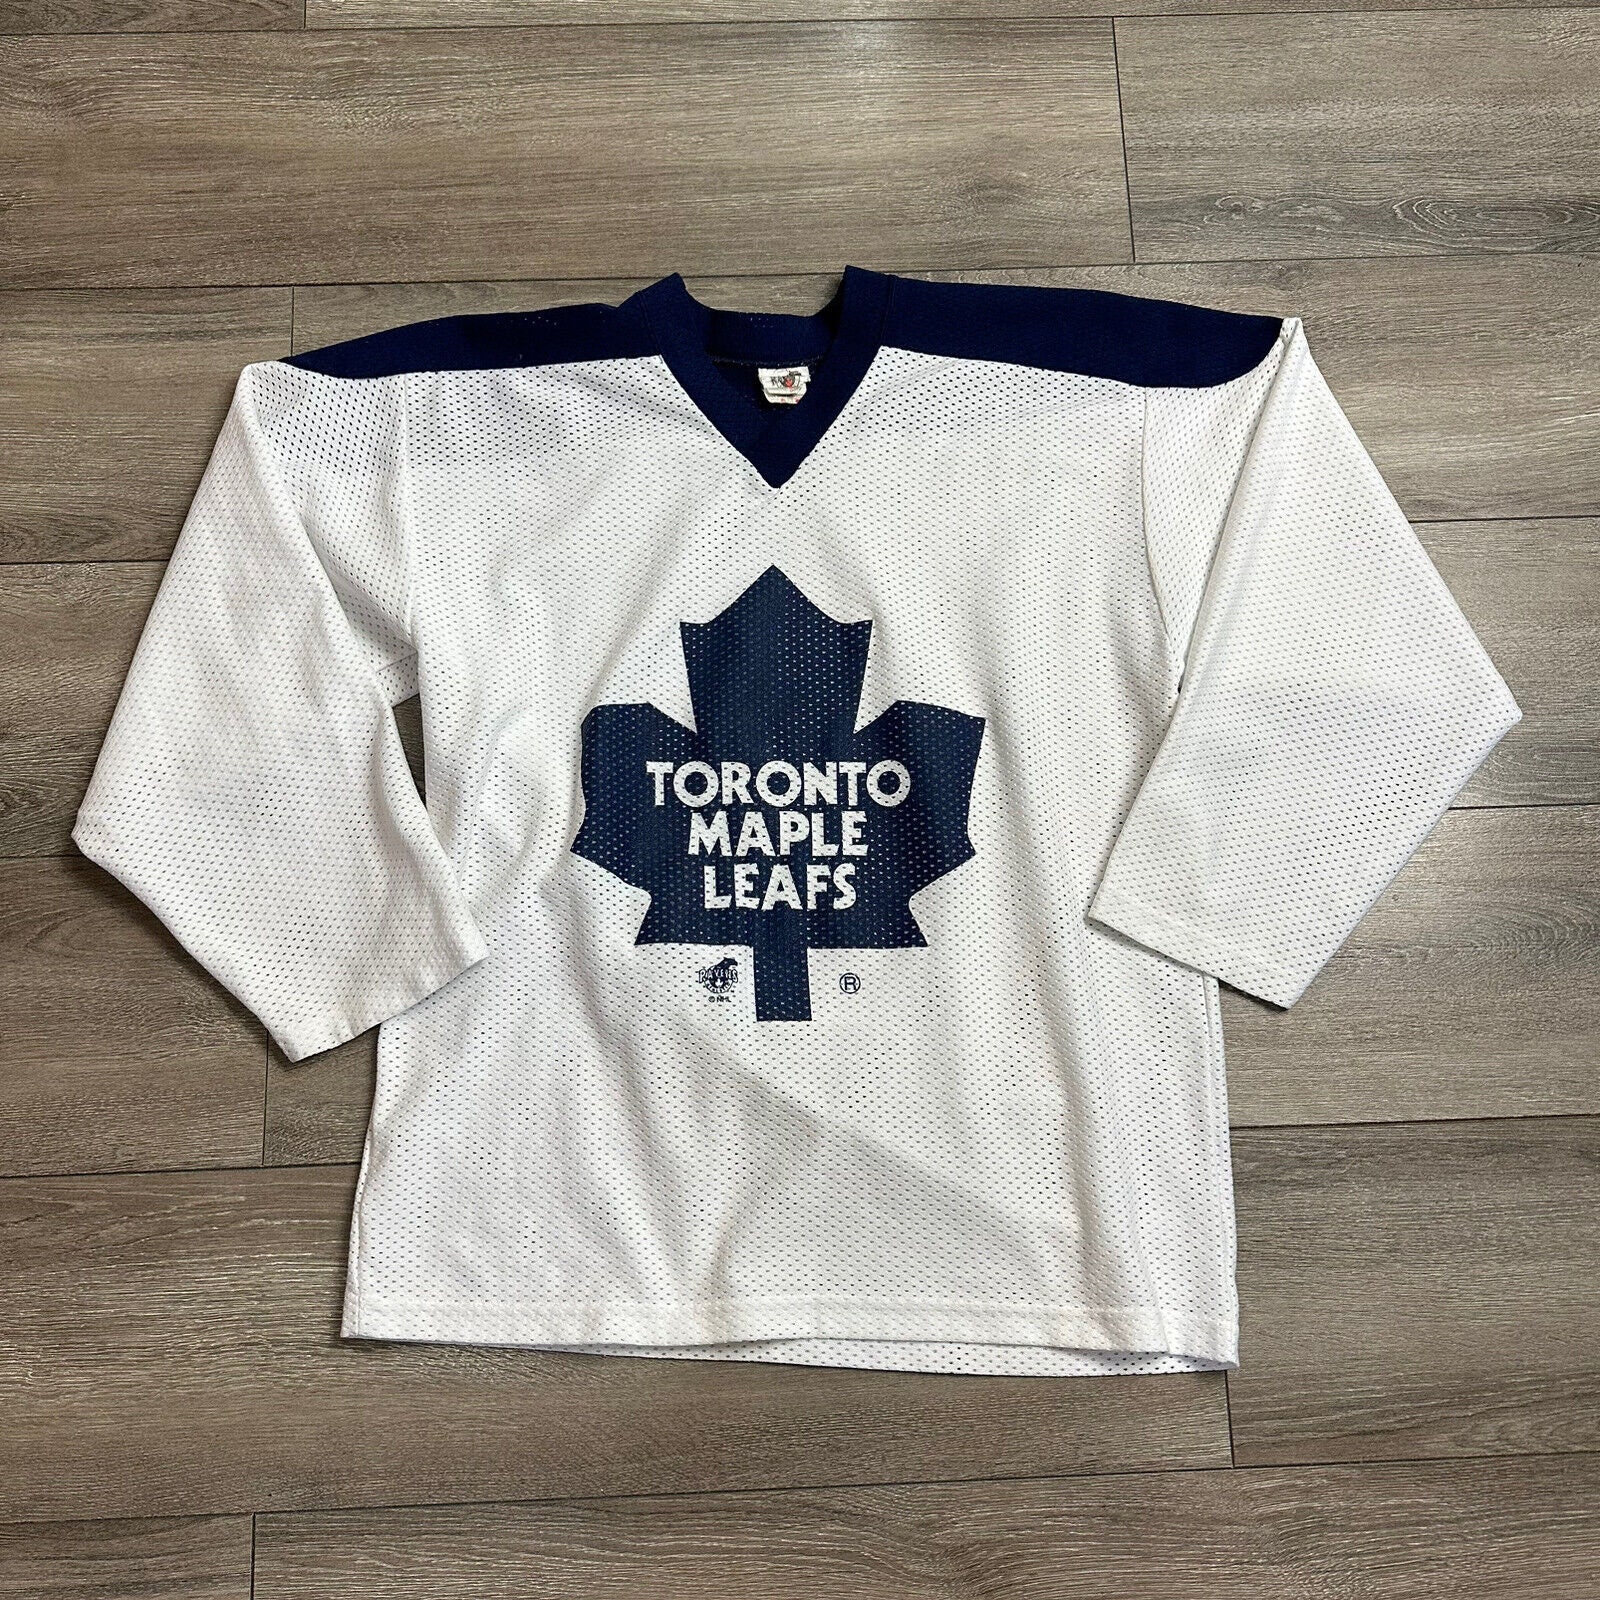 Mats Sundin Toronto Maple Leafs Autographed Replica CCM Vintage